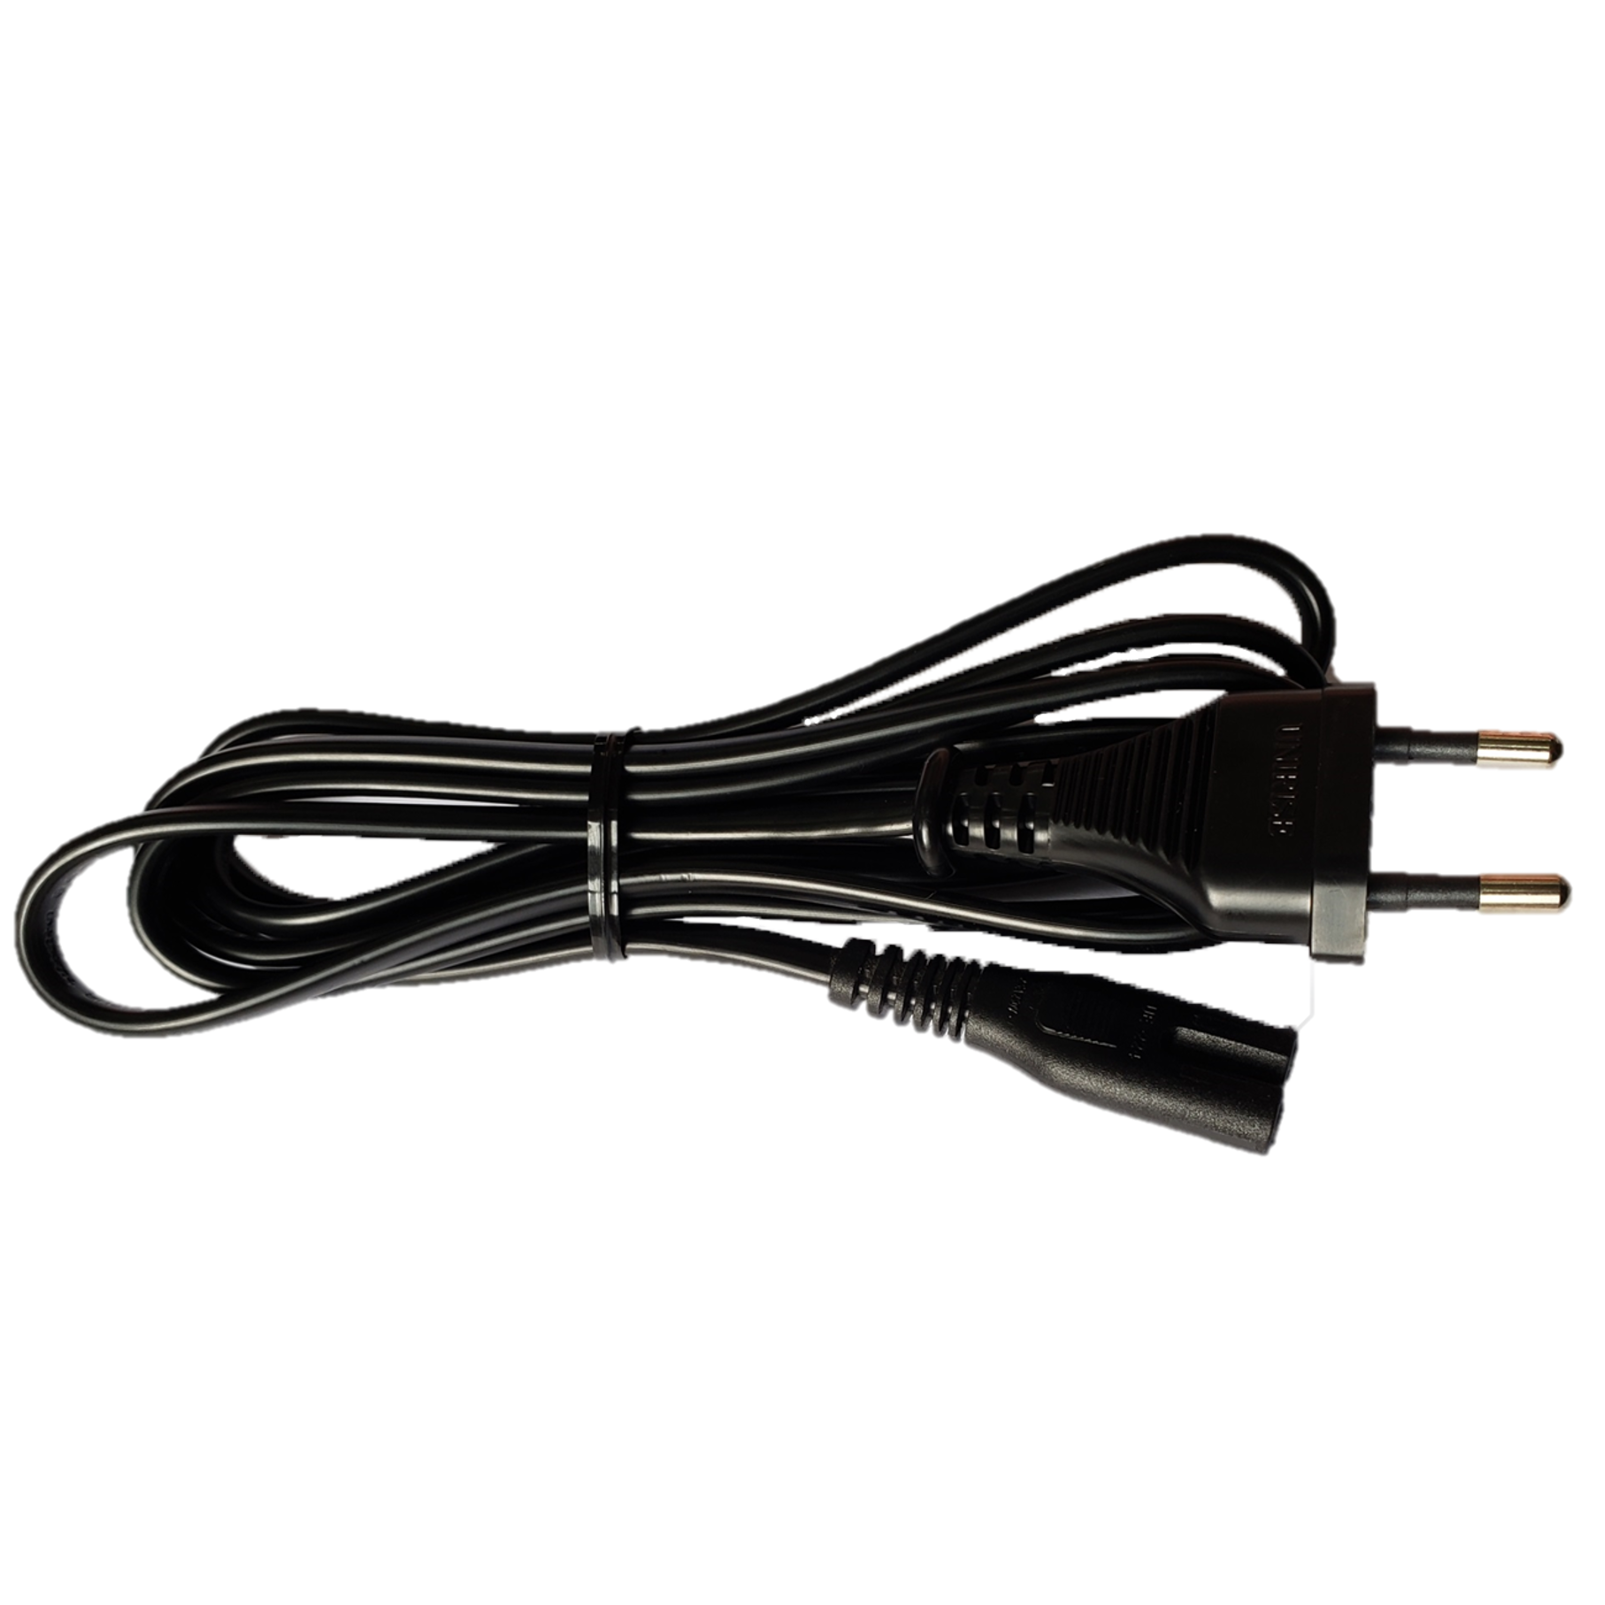 Harman Kardon Power cable for Citation - Black - Power cable 180 cm - Hero